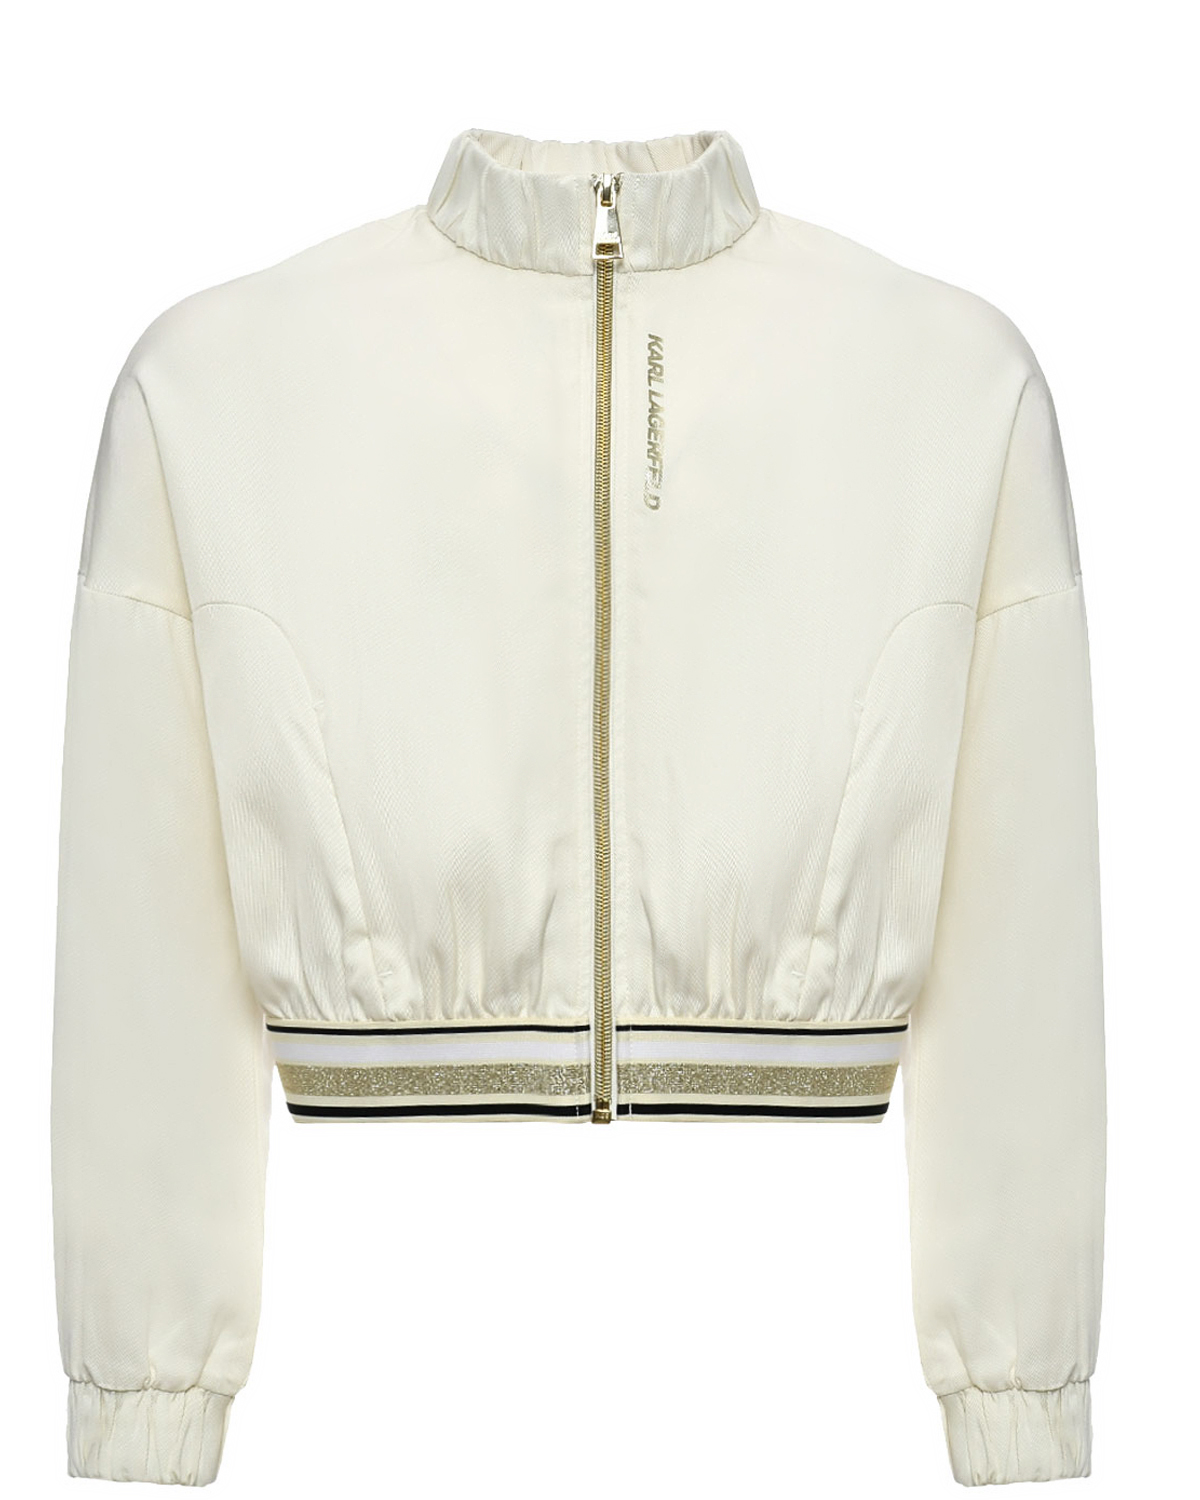 Спортивная куртка с лого из стразов, белая Karl Lagerfeld kids, размер 140, цвет нет цвета - фото 1